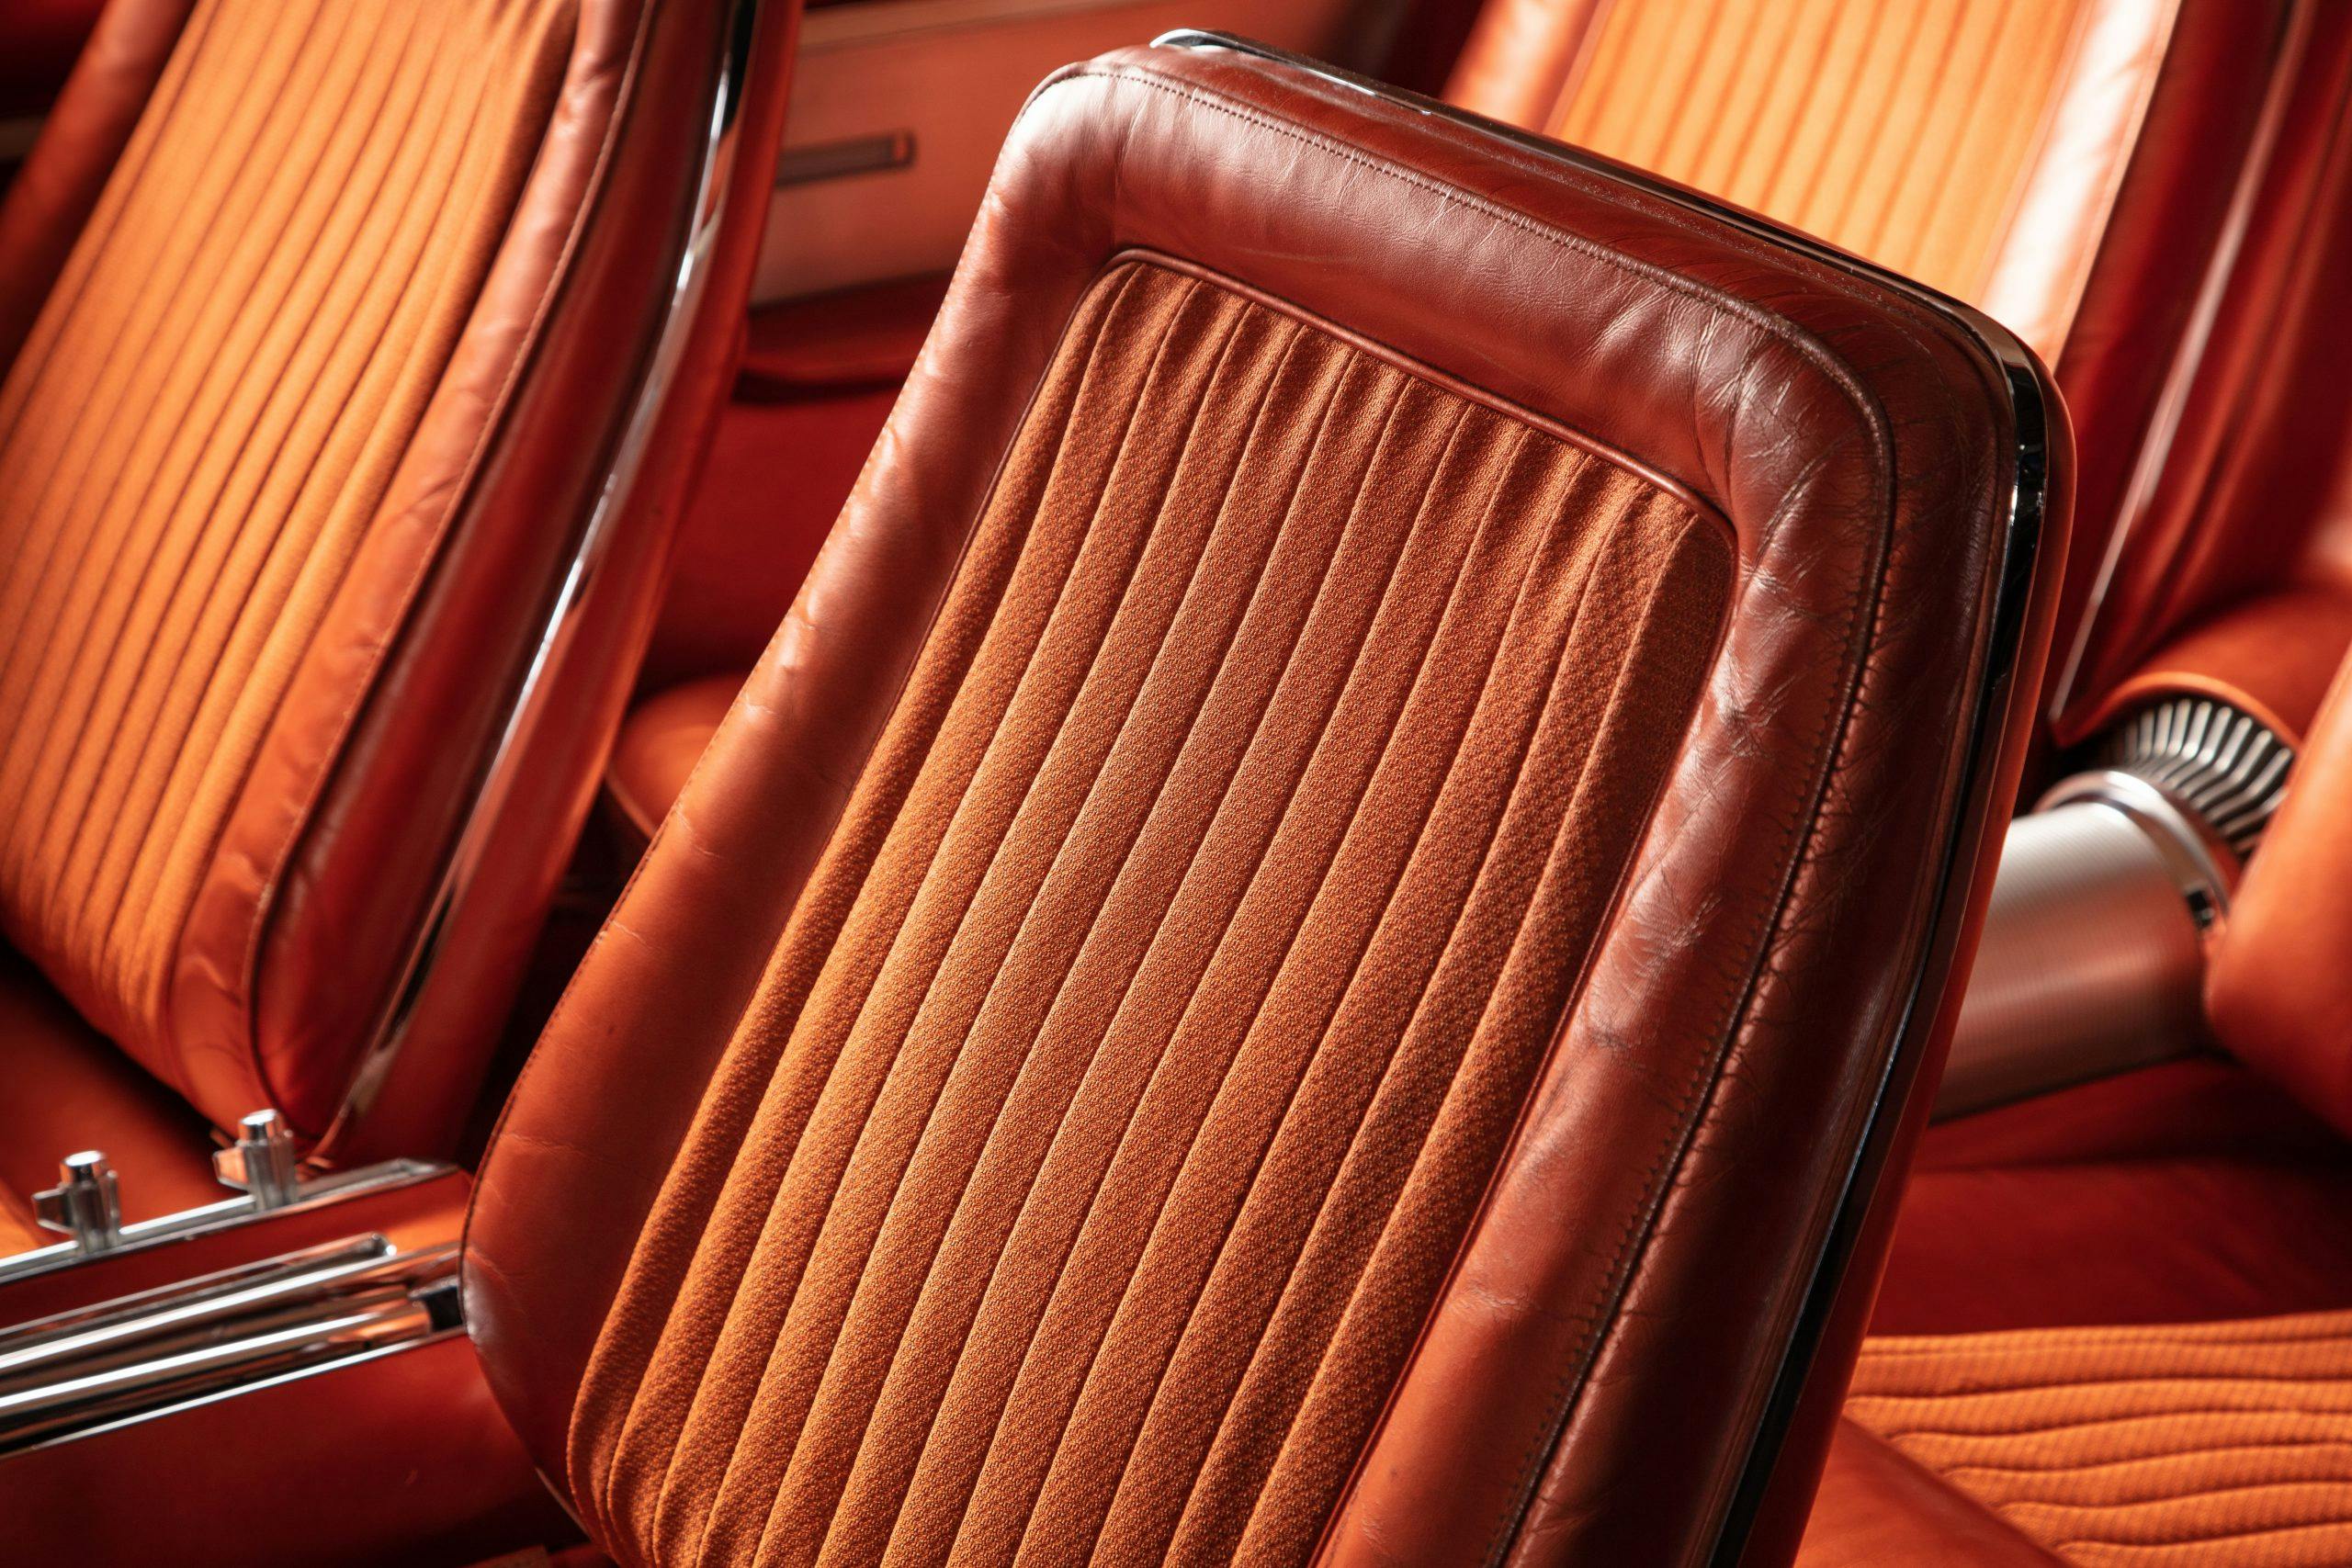 Chrysler Turbine car interior seat detail